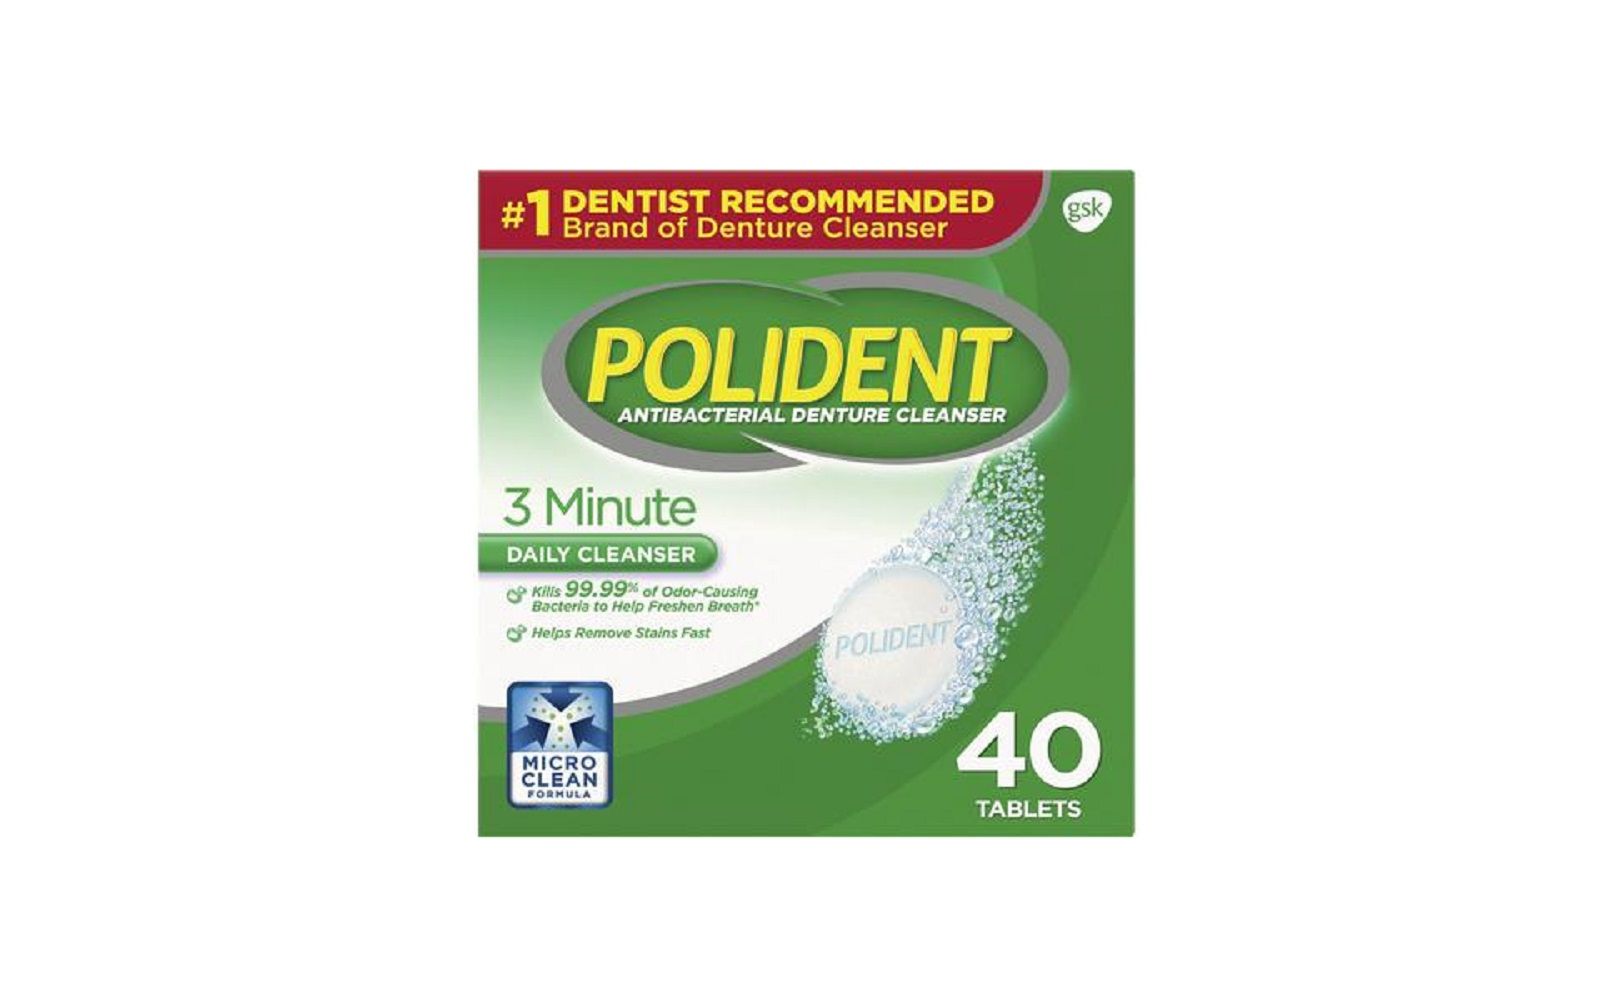 Polident® 3-minute antibacterial denture cleanser - glaxosmithkline